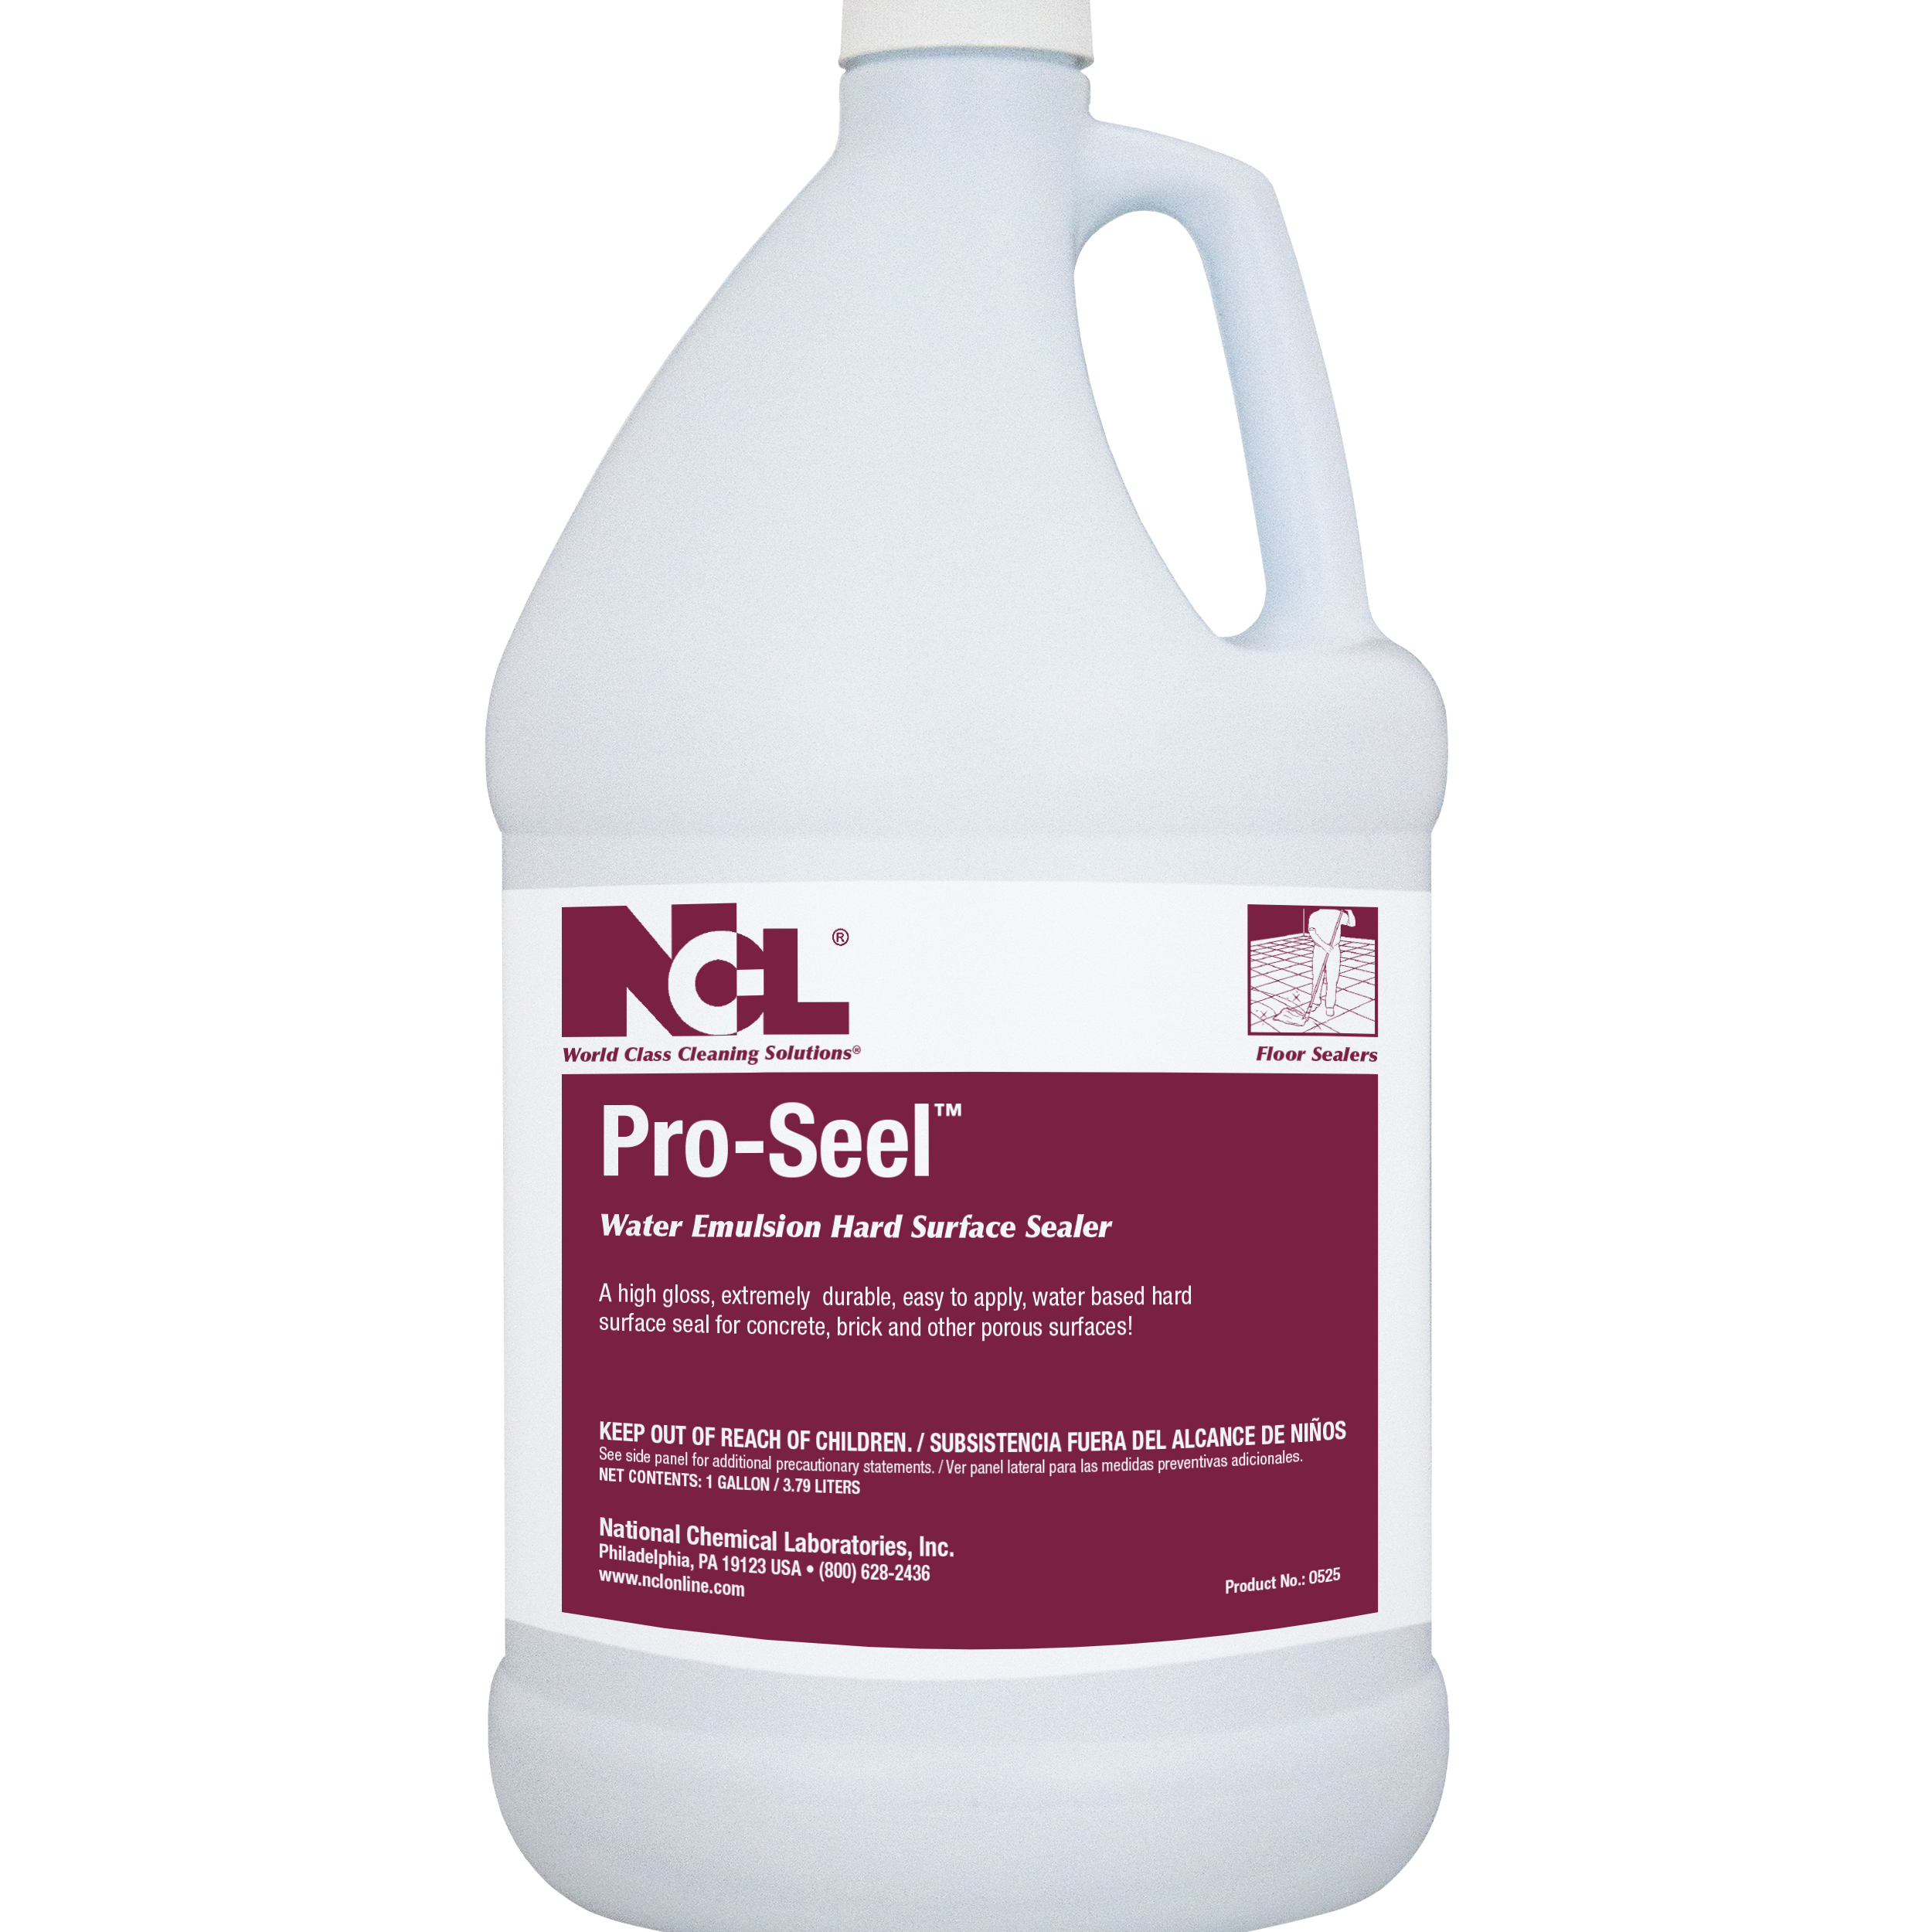  PRO-SEEL Water Emulsion Hard Surface Sealer 4/1 Gal. Case (NCL0525-29) 